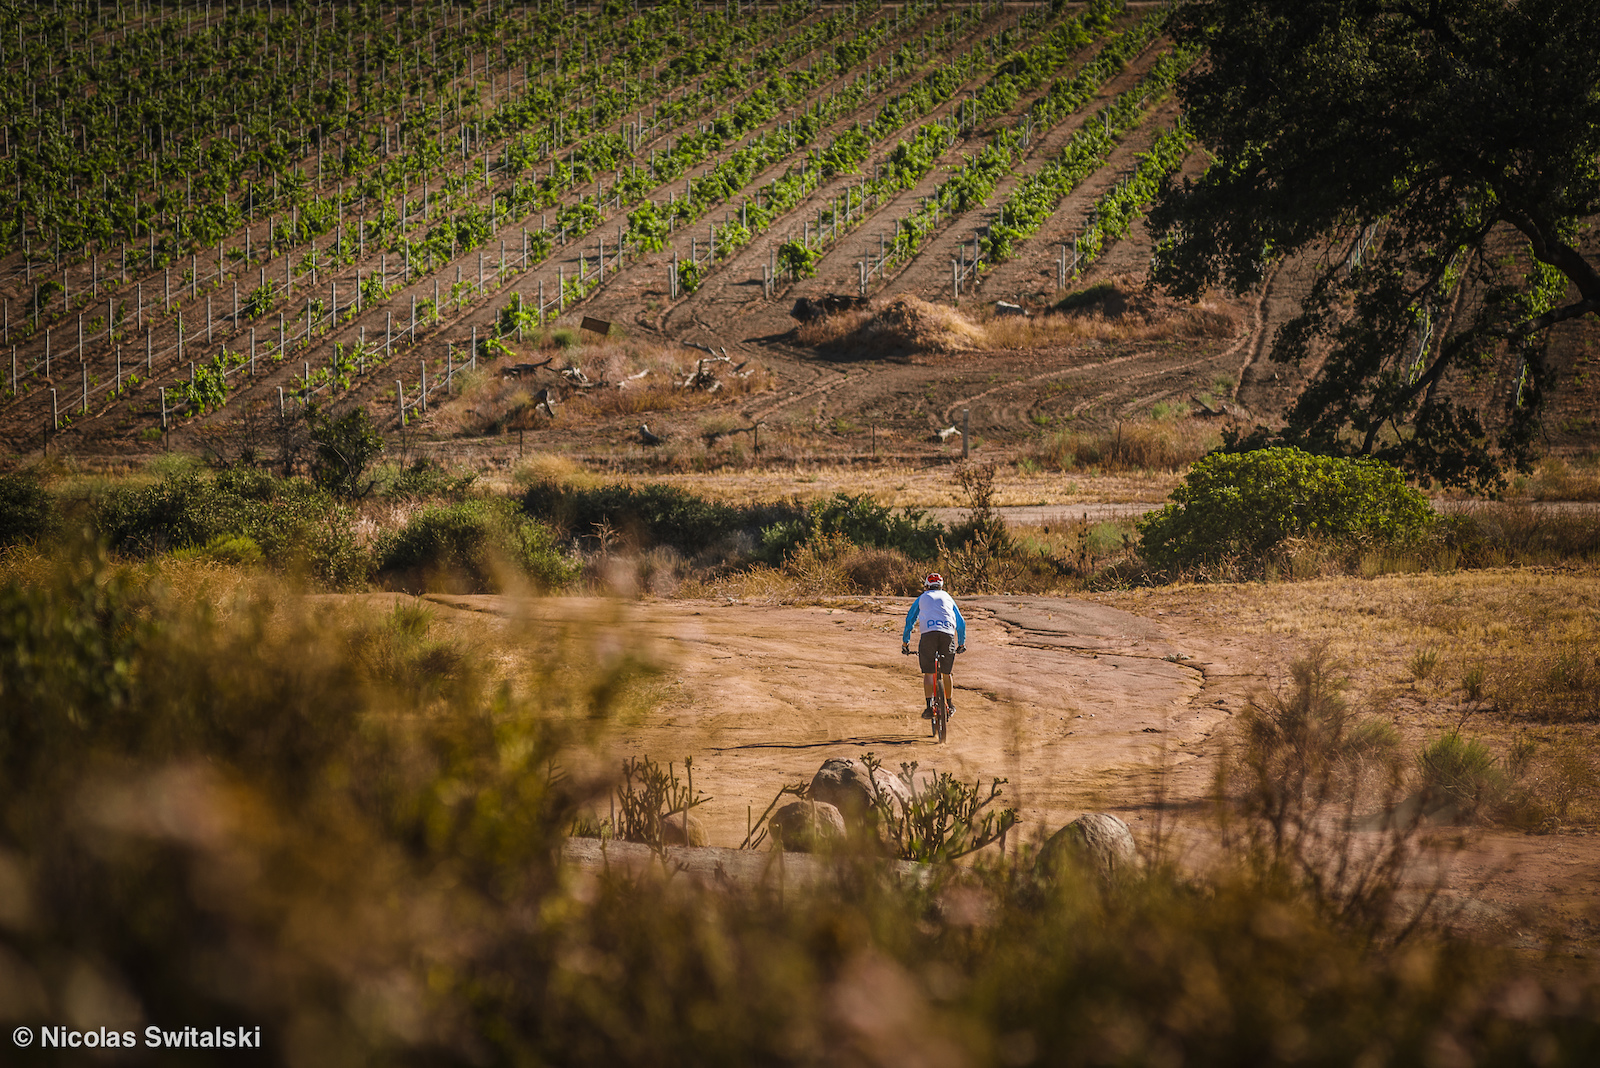 Chillin in Baja s Wine Region Valle de Guadalupe